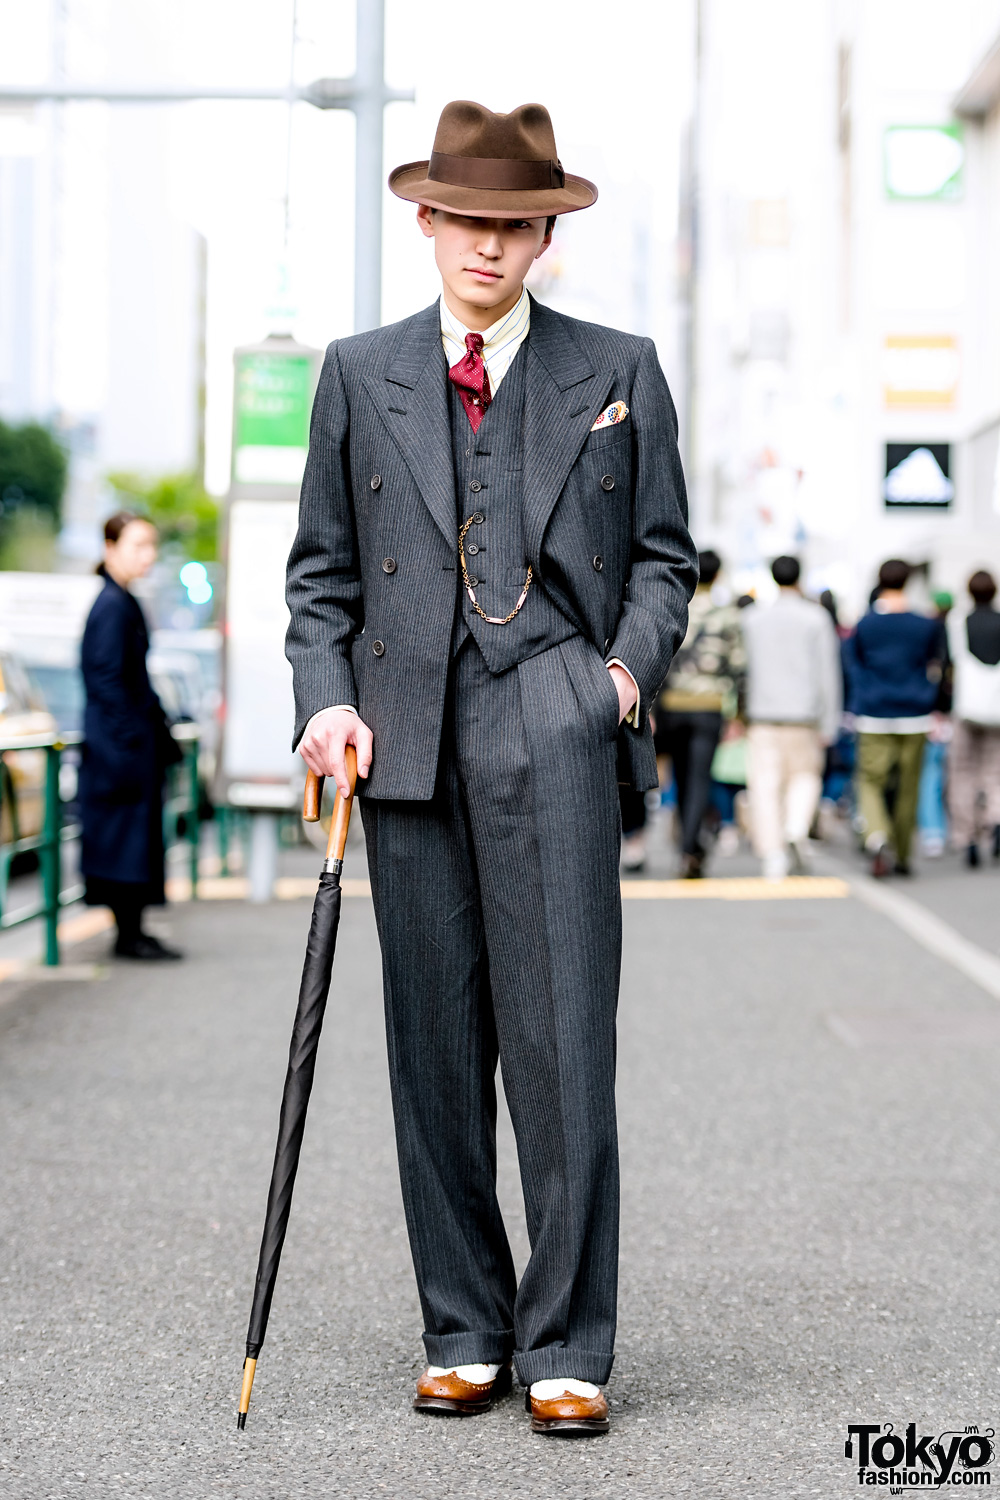 Retro Dapper Tokyo Street Style w/ Tailor-made Suit, Church’s Shoes & Ramuda Umbrella